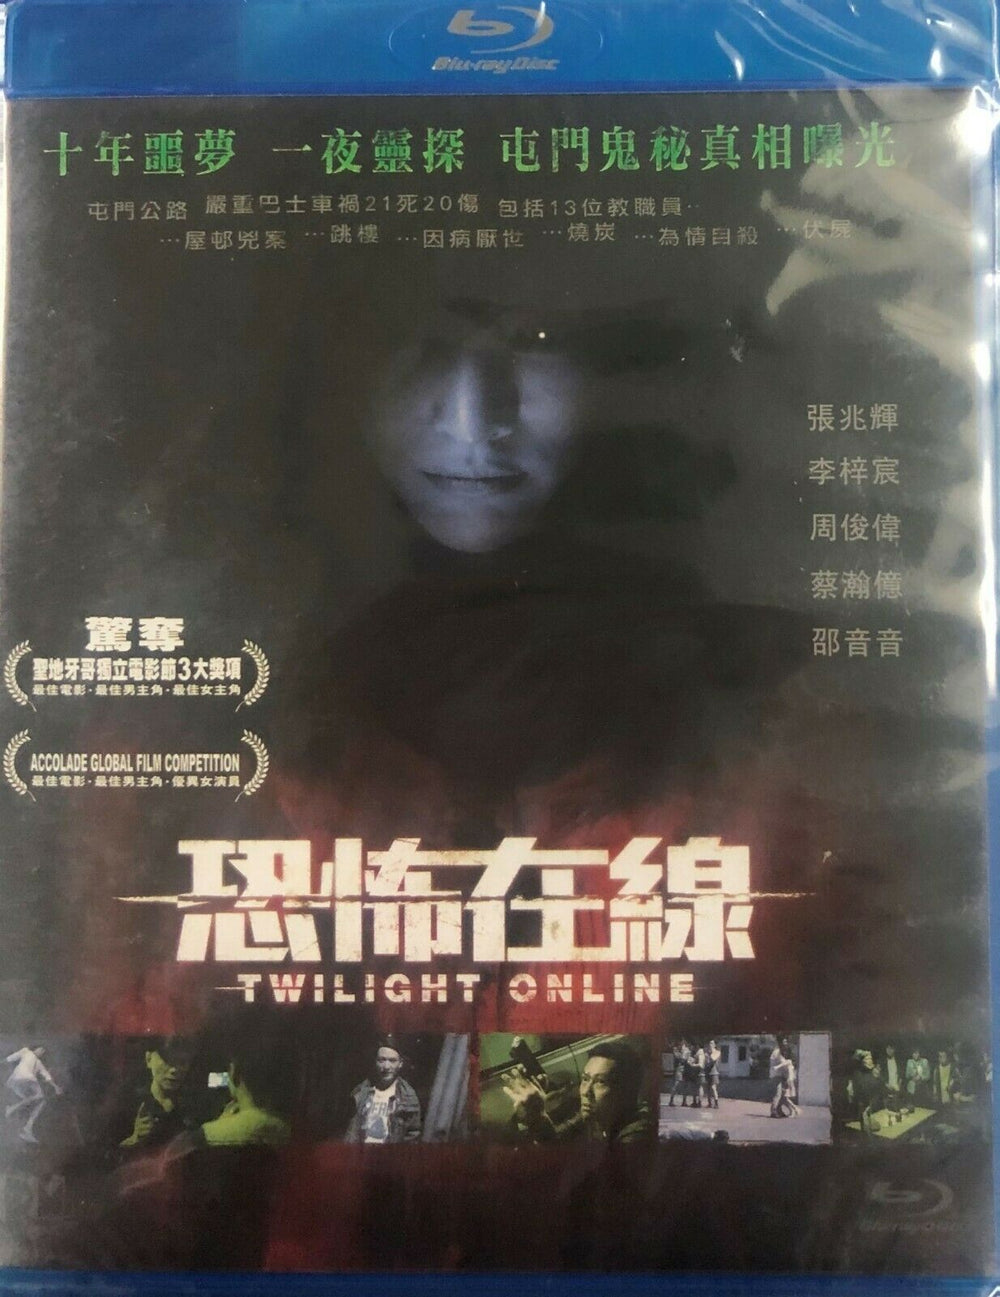 Twilight Online 2014 (Hong Kong Movie) BLU-RAY with English Subtitles (Region A) 恐怖在線